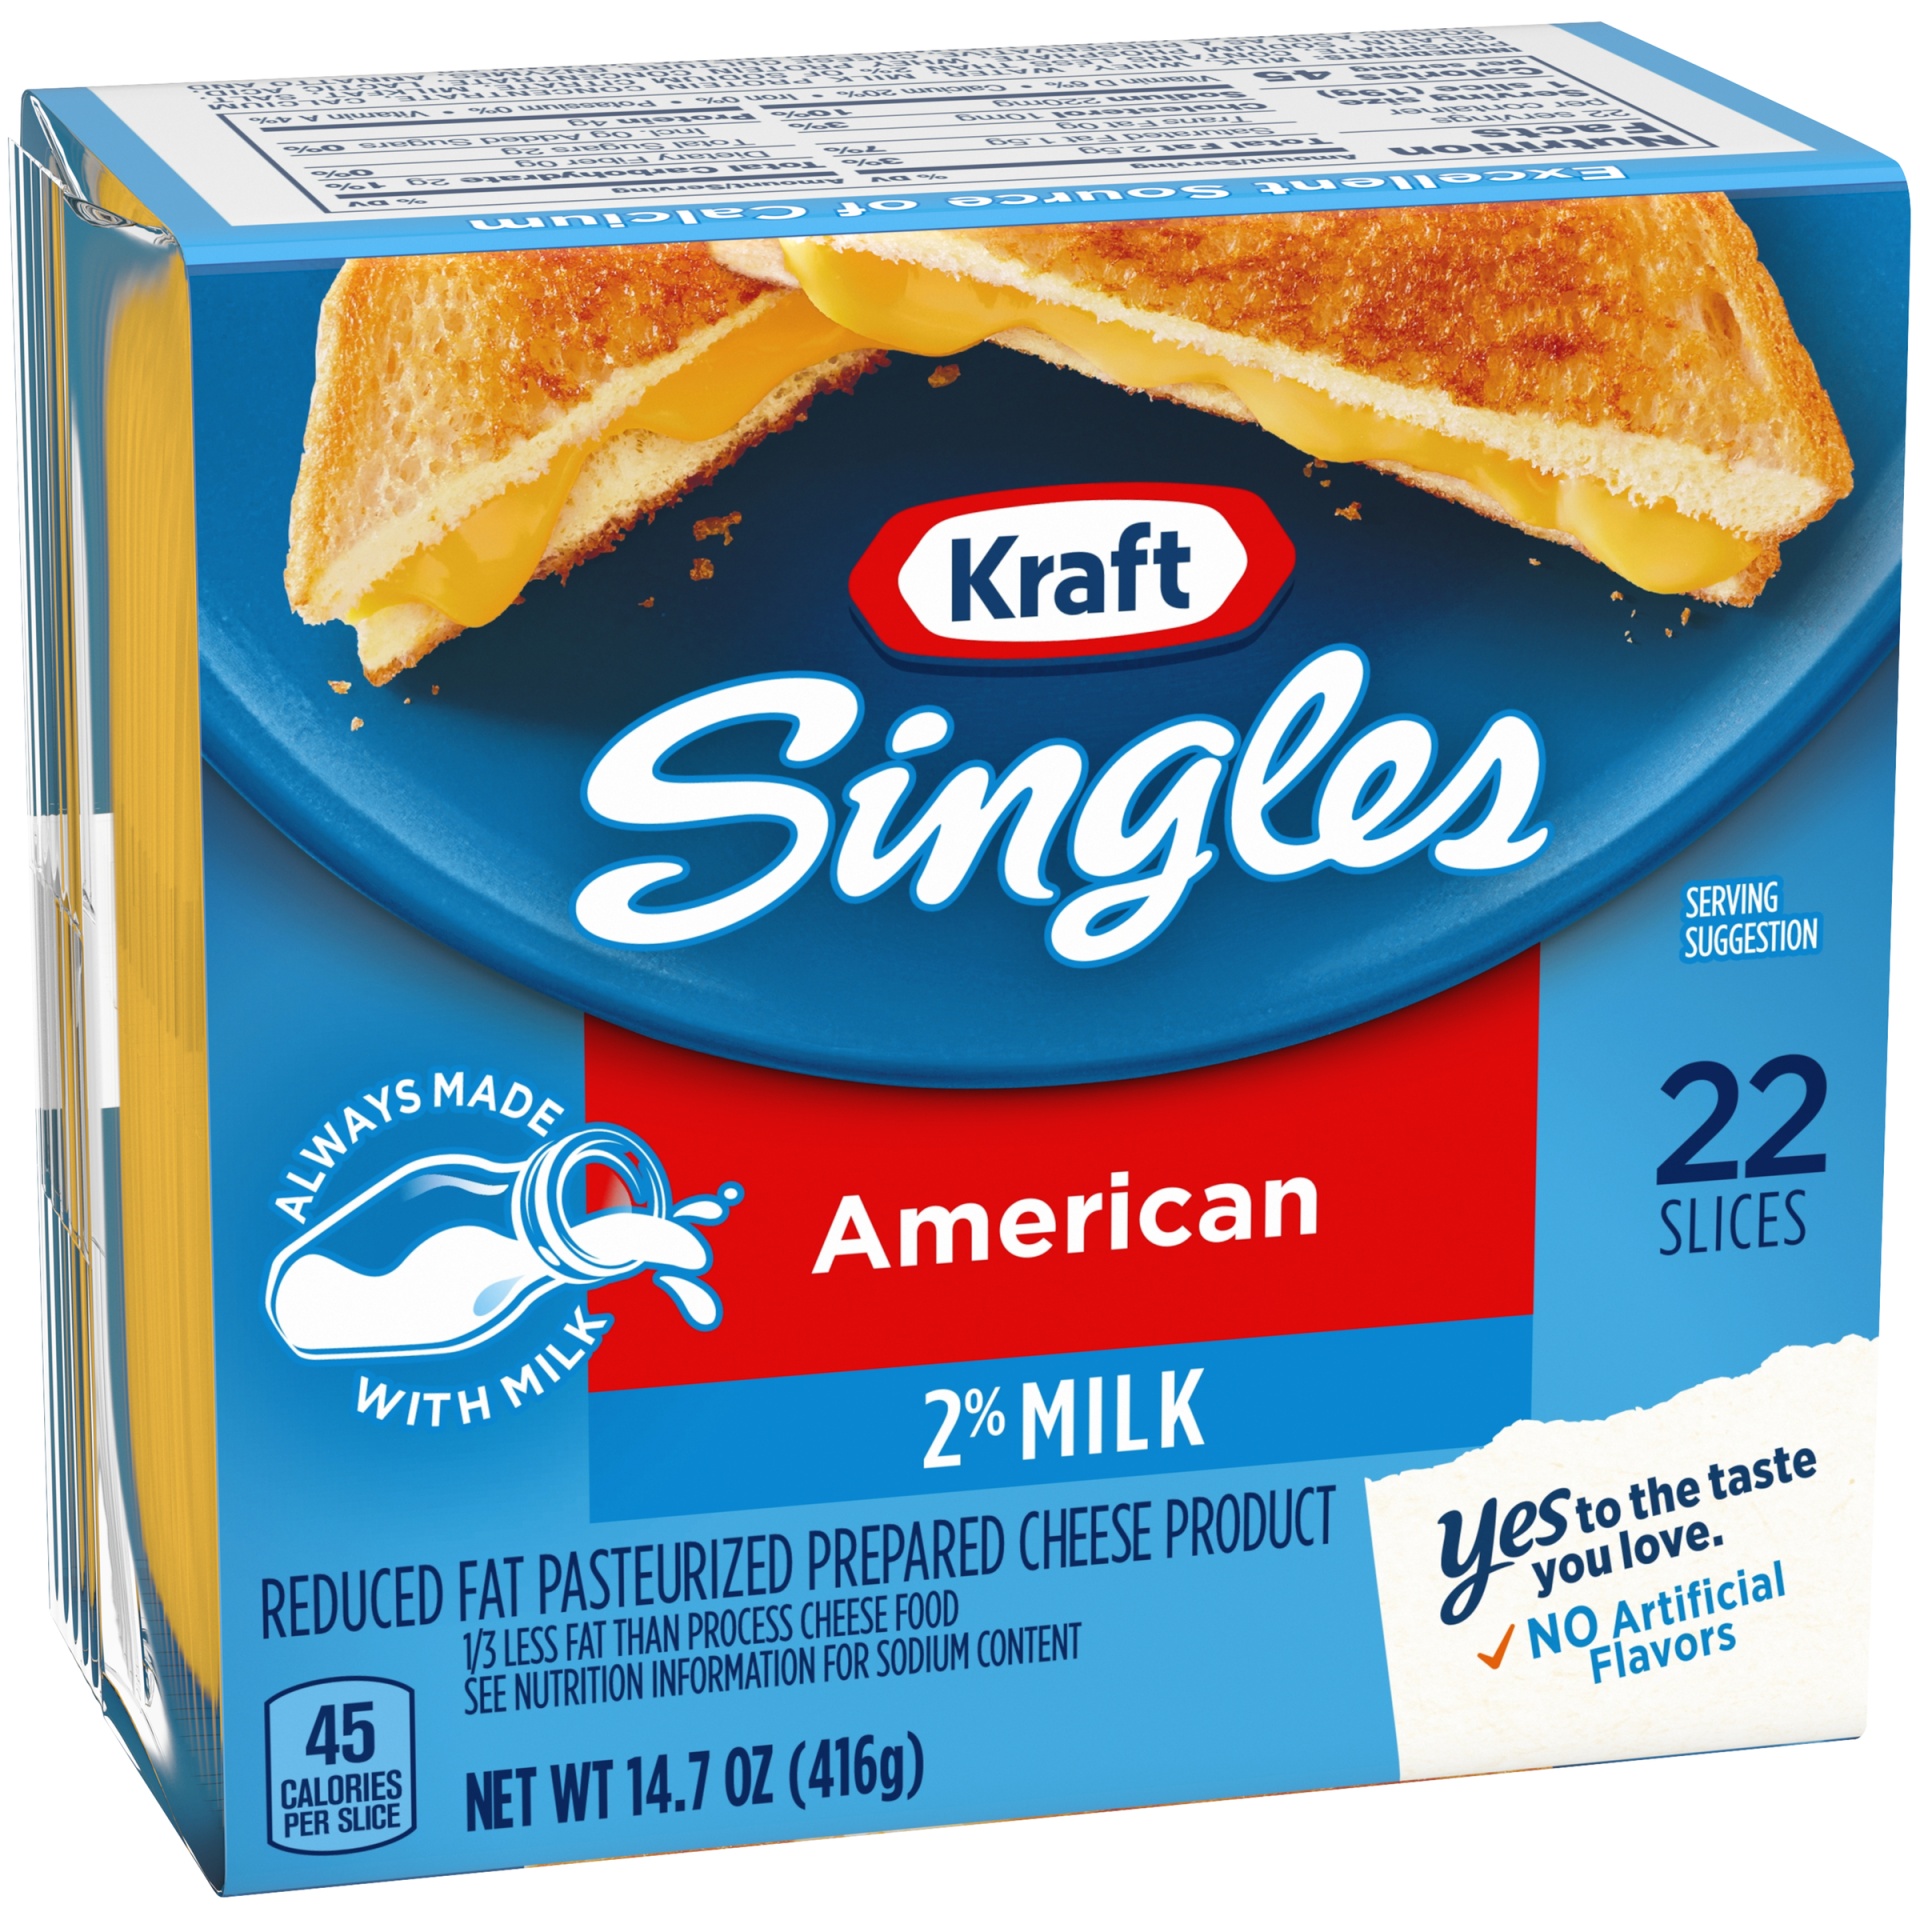 slide 2 of 6, Kraft Singles 2% Pasteurized Prepared Cheese Product American Slices Pack, 22 ct; 14.7 oz